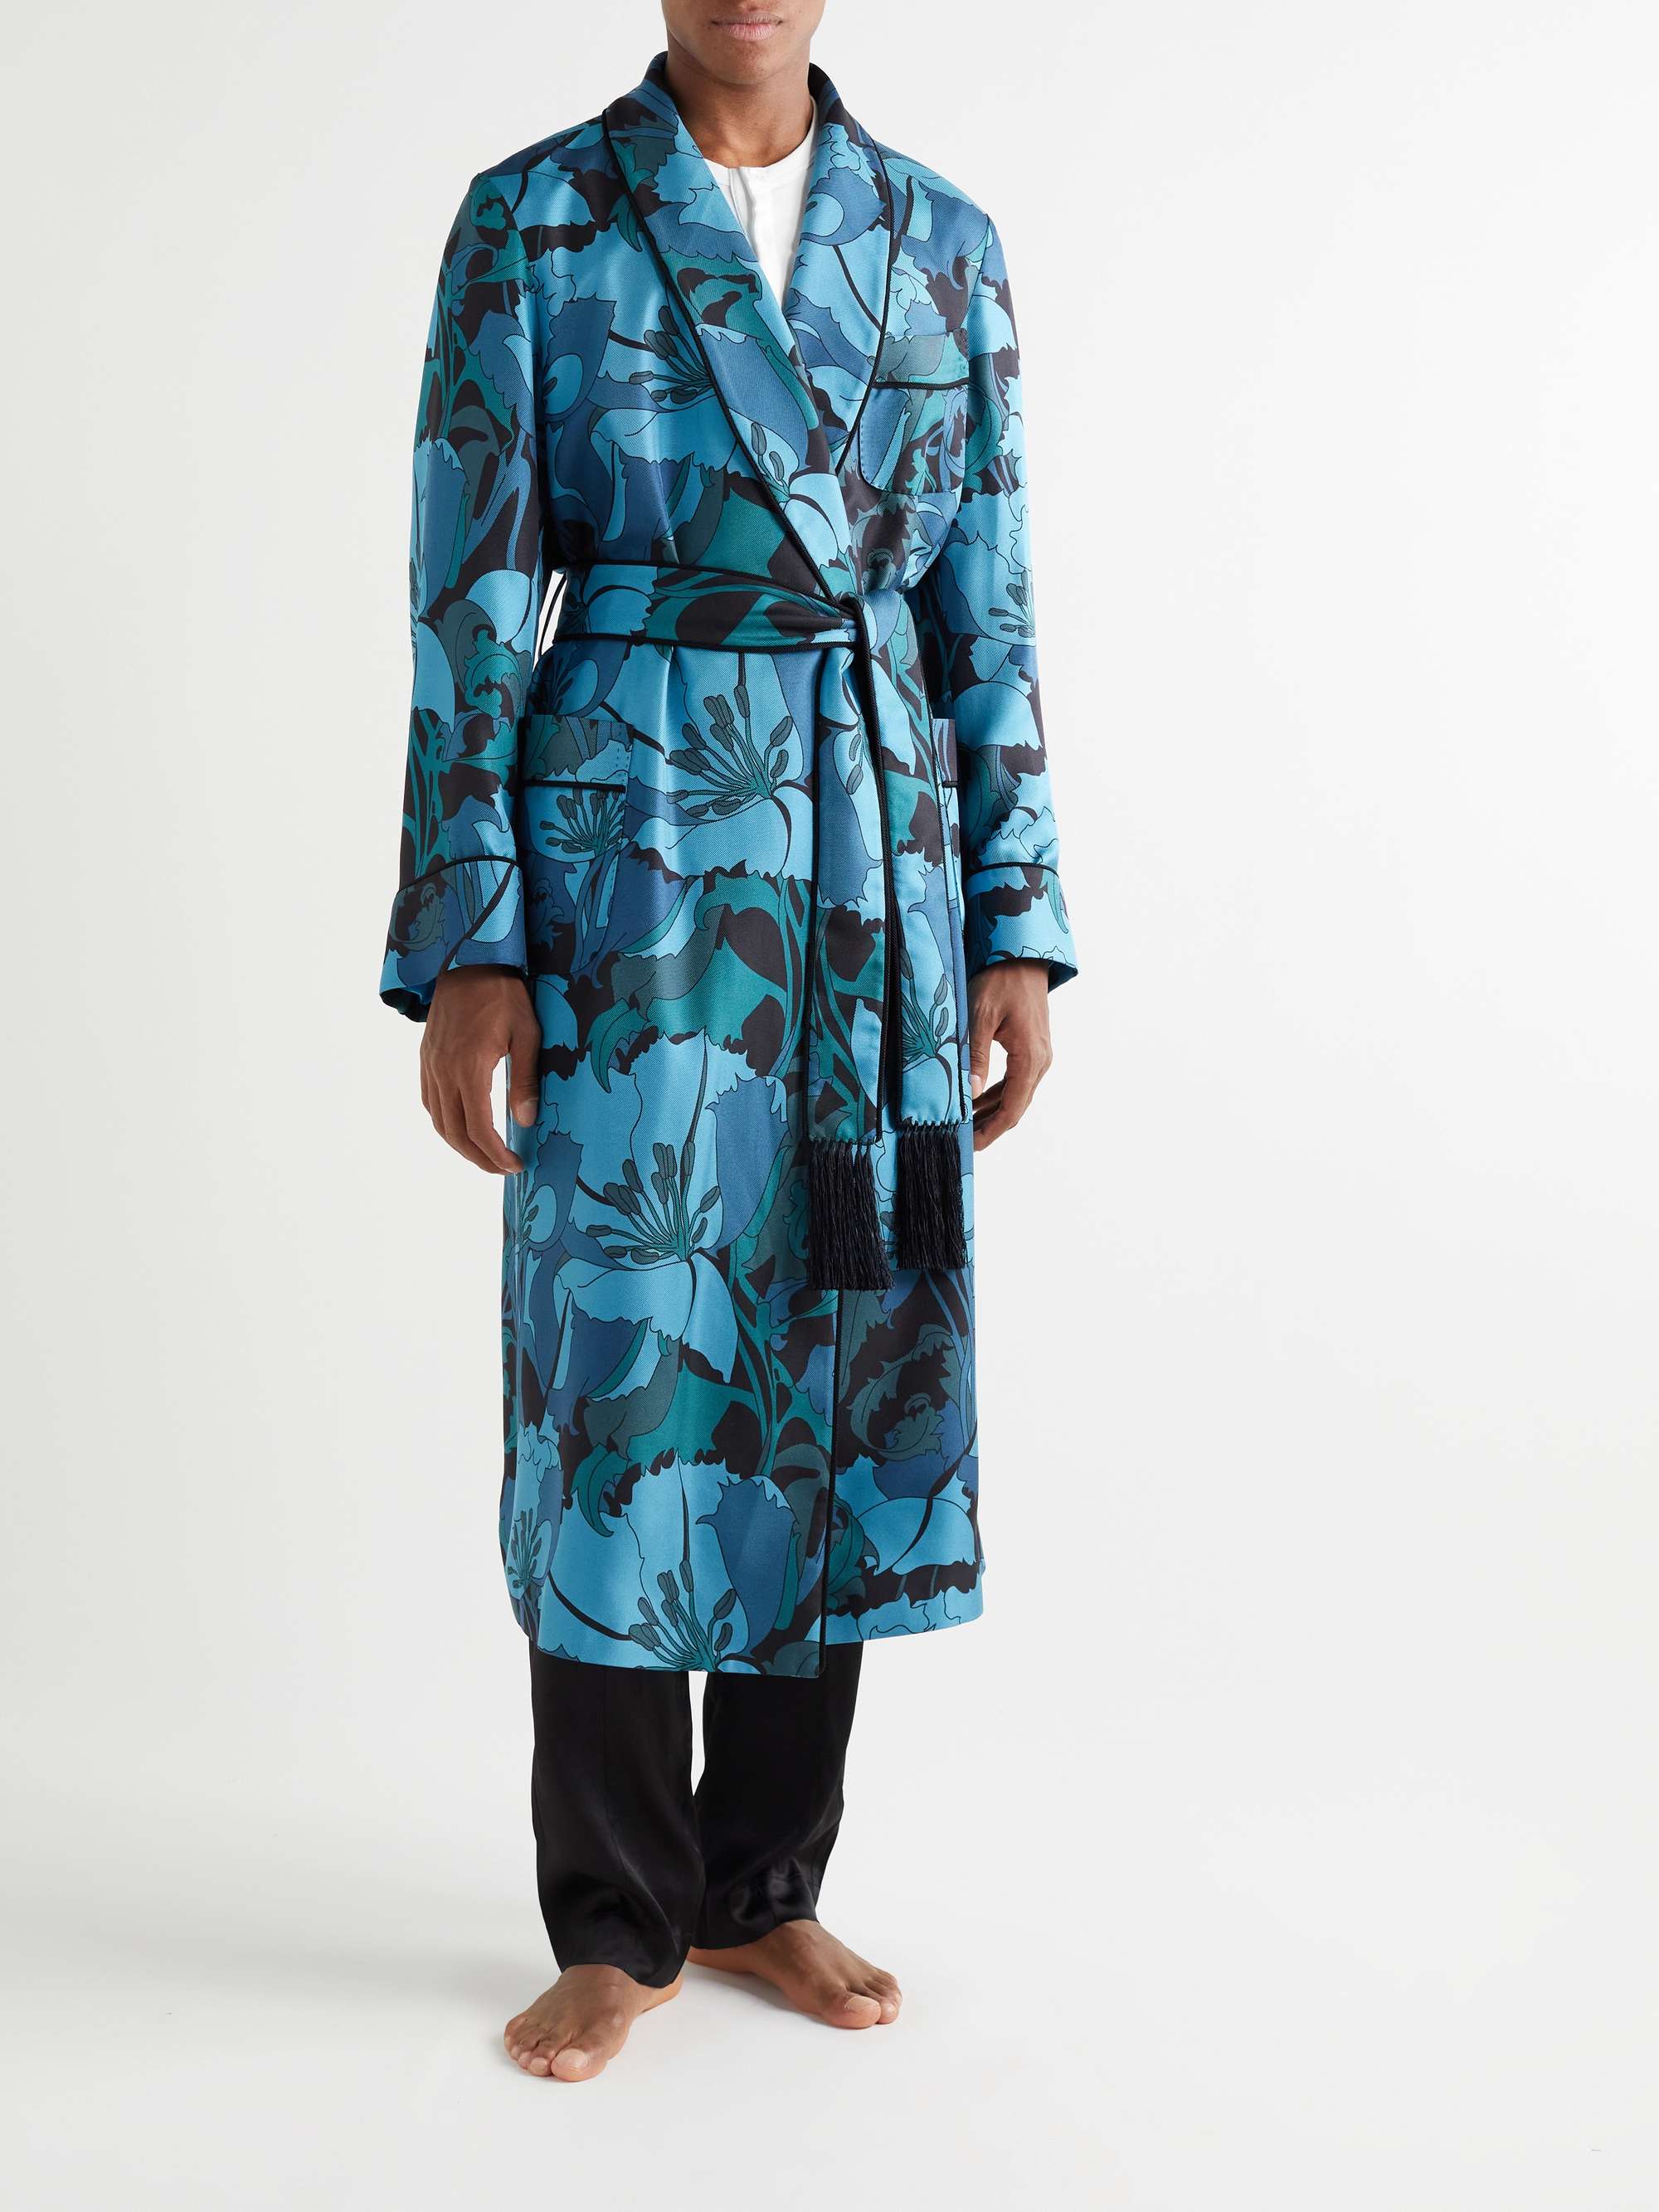 TOM FORD Tasselled Piped Floral-Print Silk-Twill Robe for Men | MR PORTER